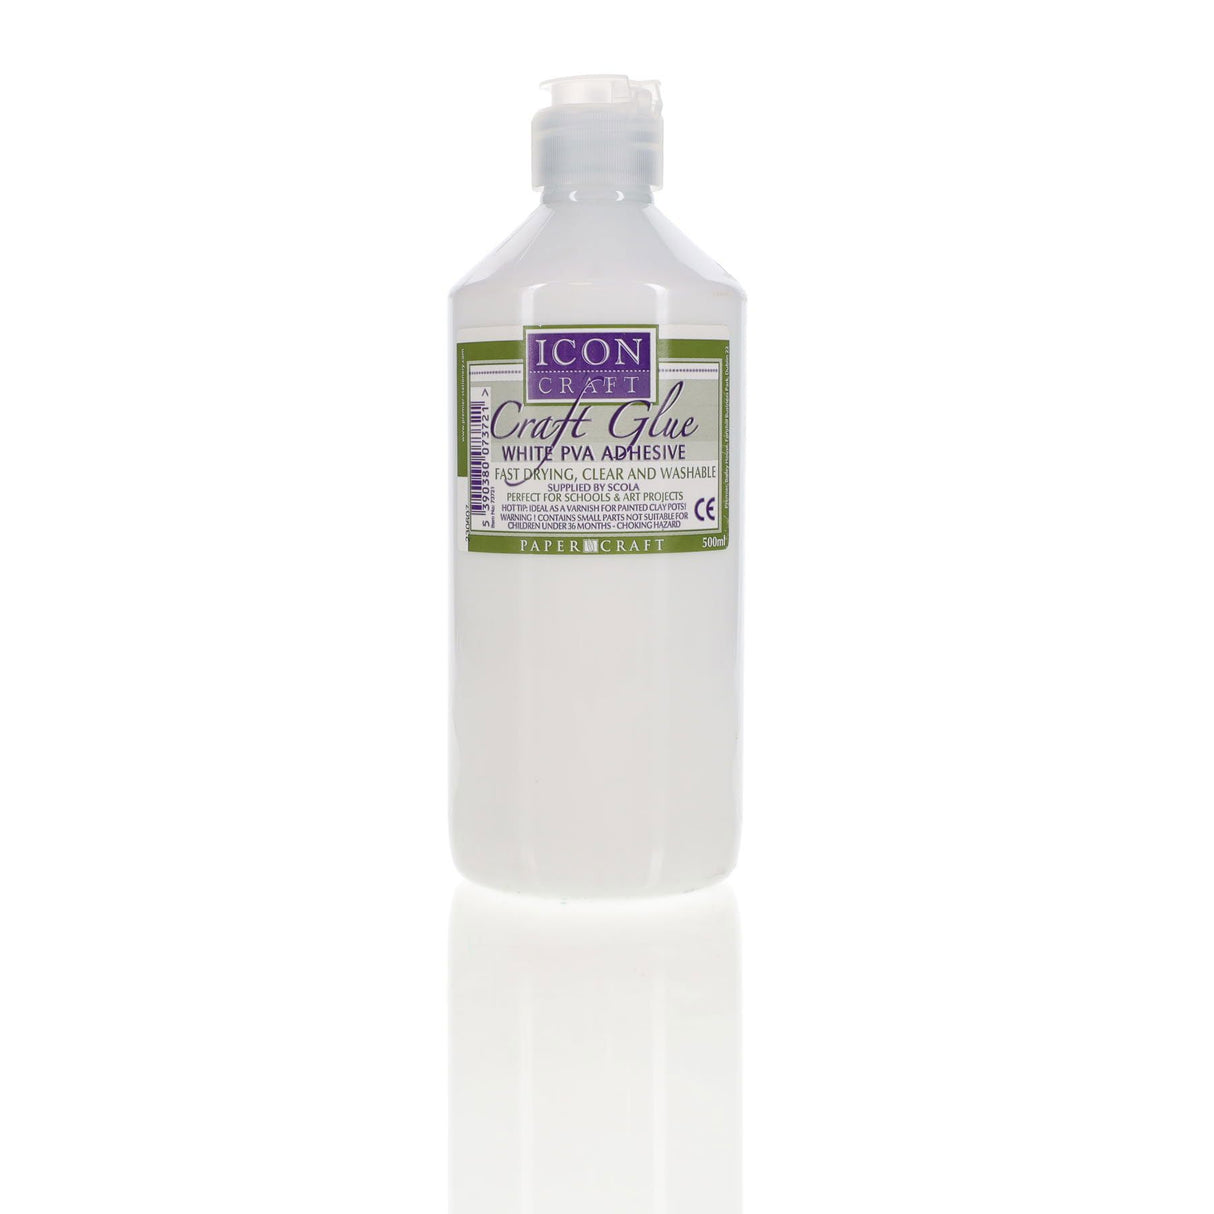 Icon PVA Craft Glue - Fast Drying, Clear & Washable - 500ml Bottle | Stationery Shop UK